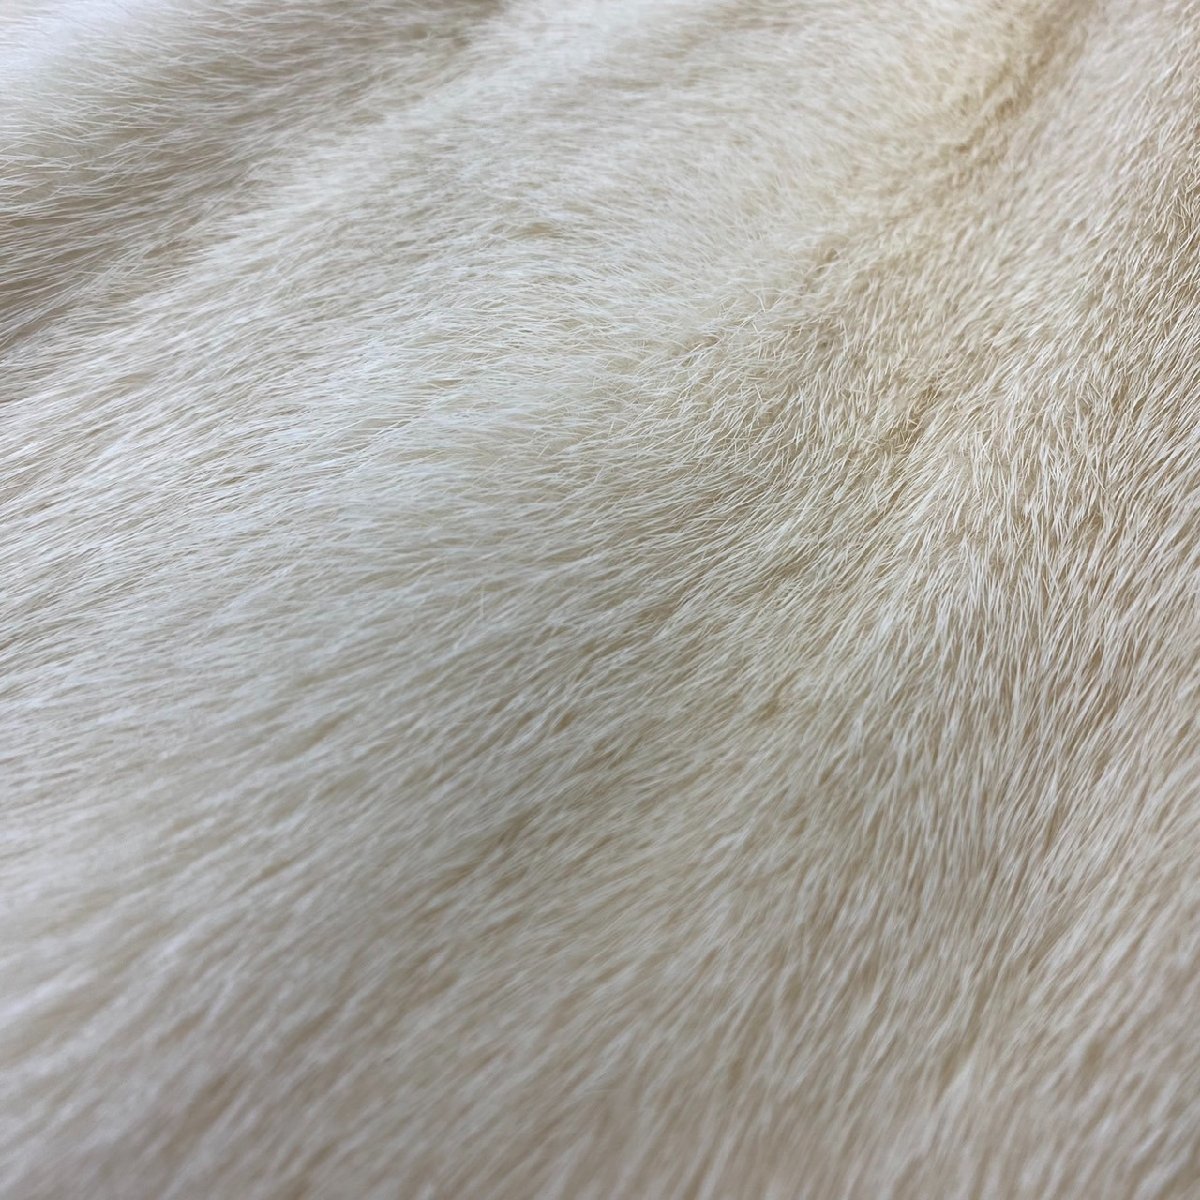 ◆◇◆ Fur Ohki 毛皮 サガミンク コート サファイヤミンク ホワイト 白 ジャケット SAGA MINK ミンク ロング 上着 冬物 レディース_画像6